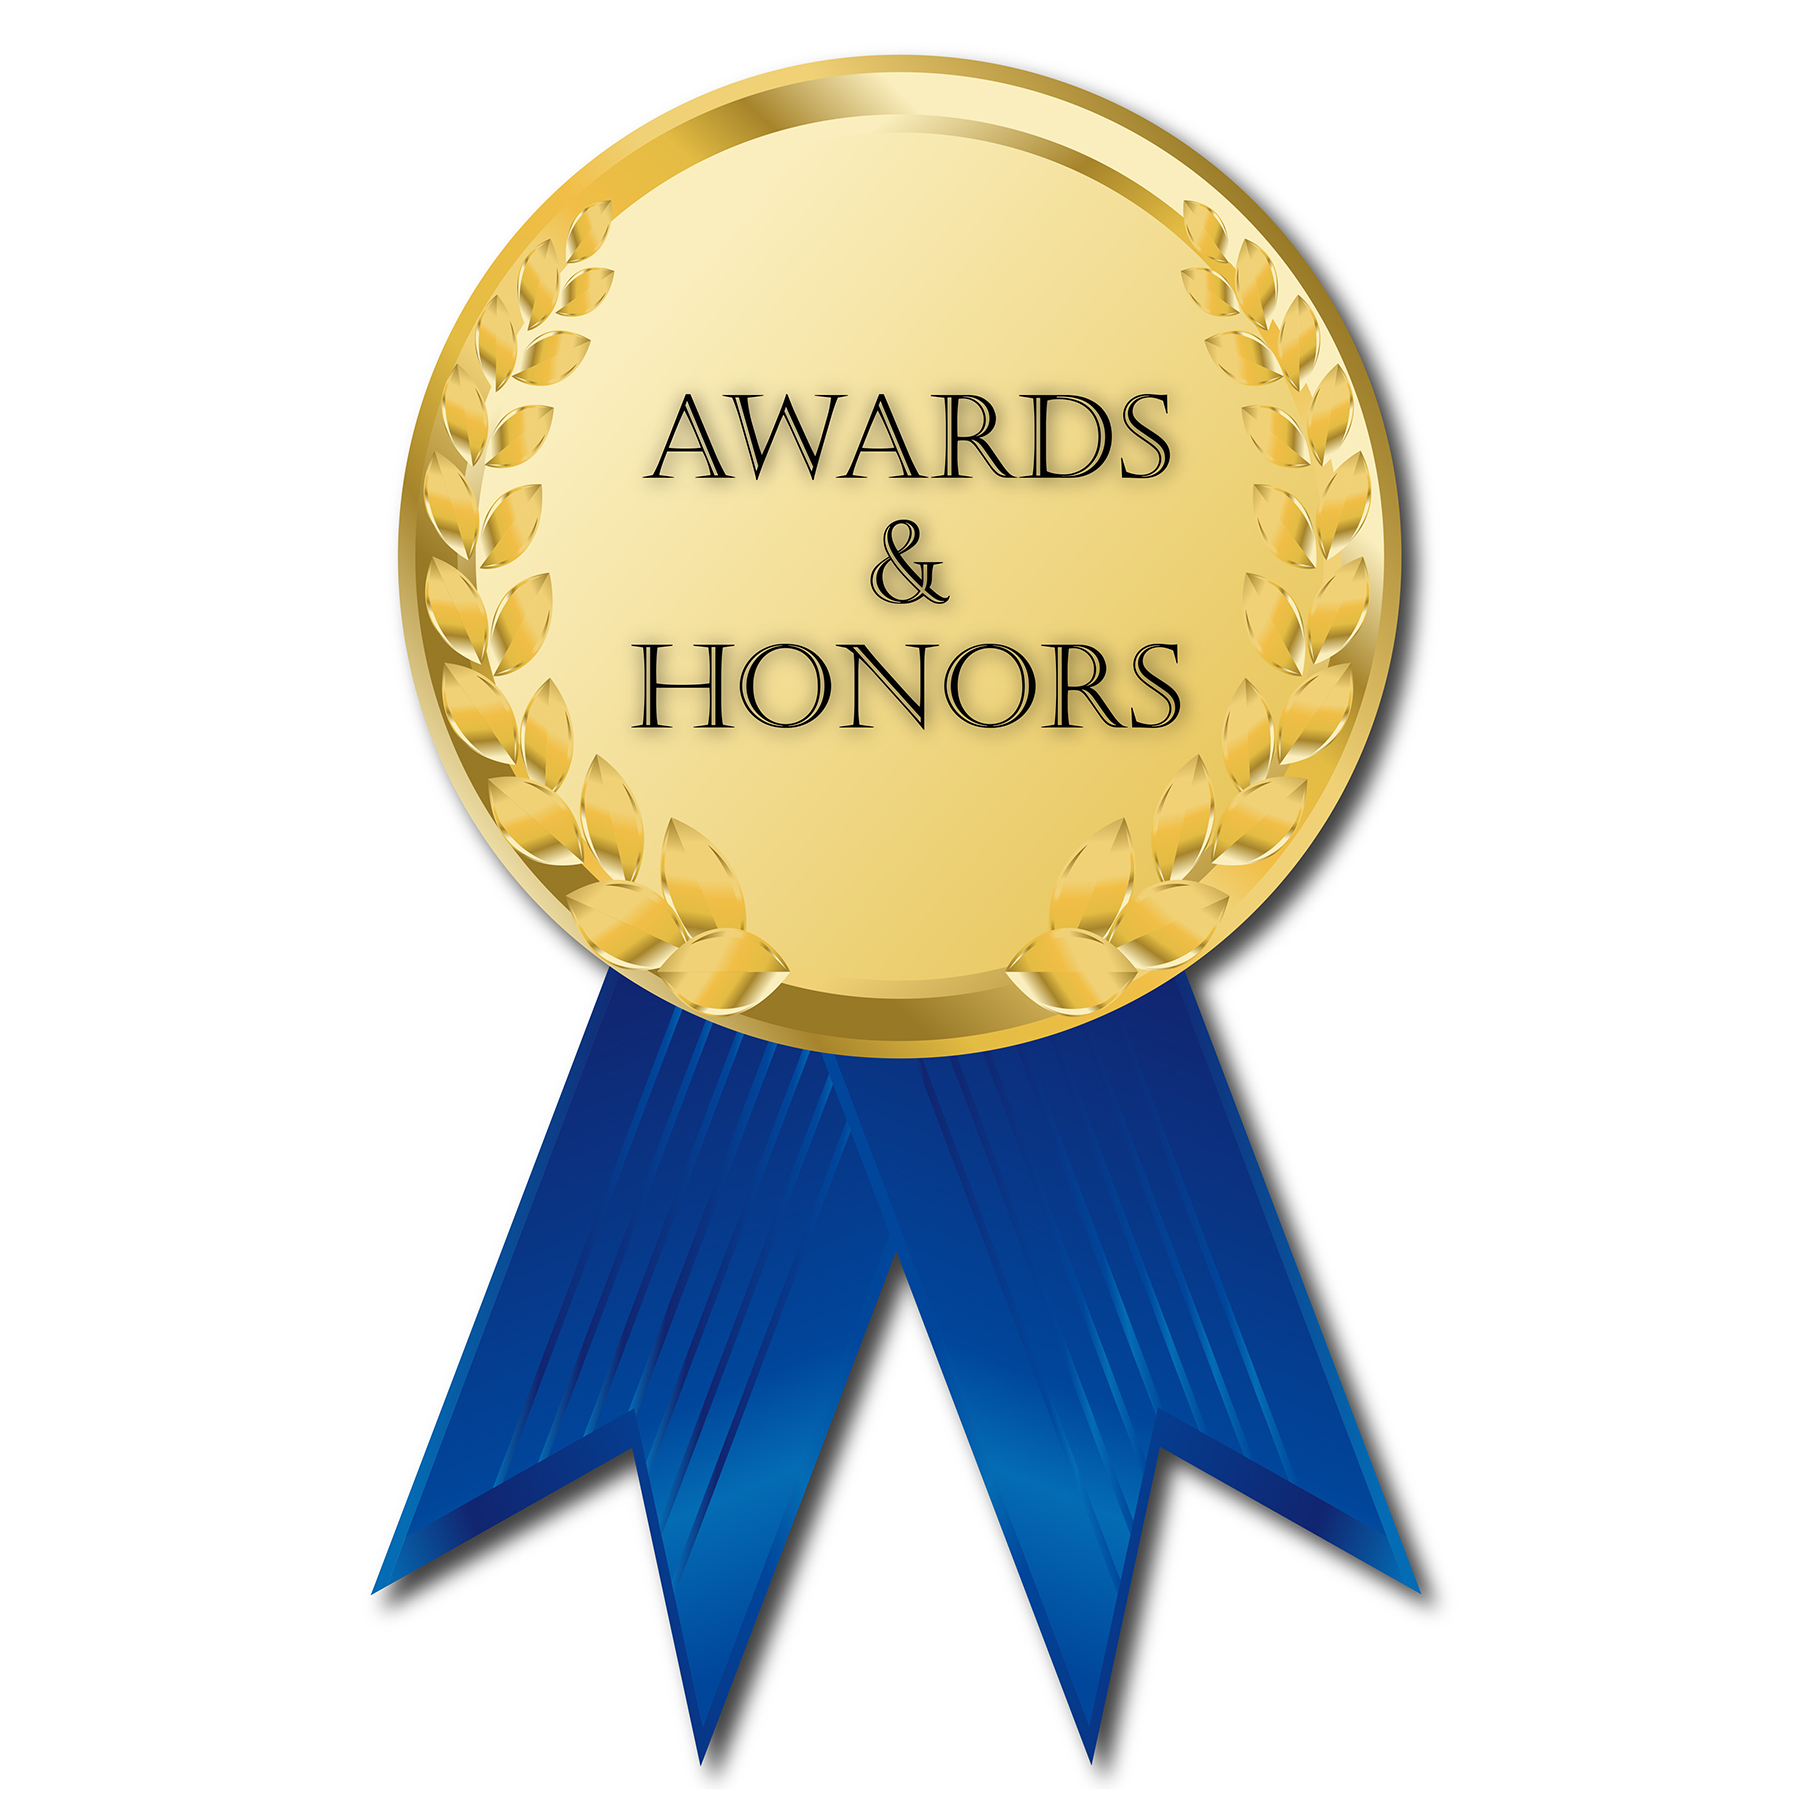 Awards and Honors - Iori 